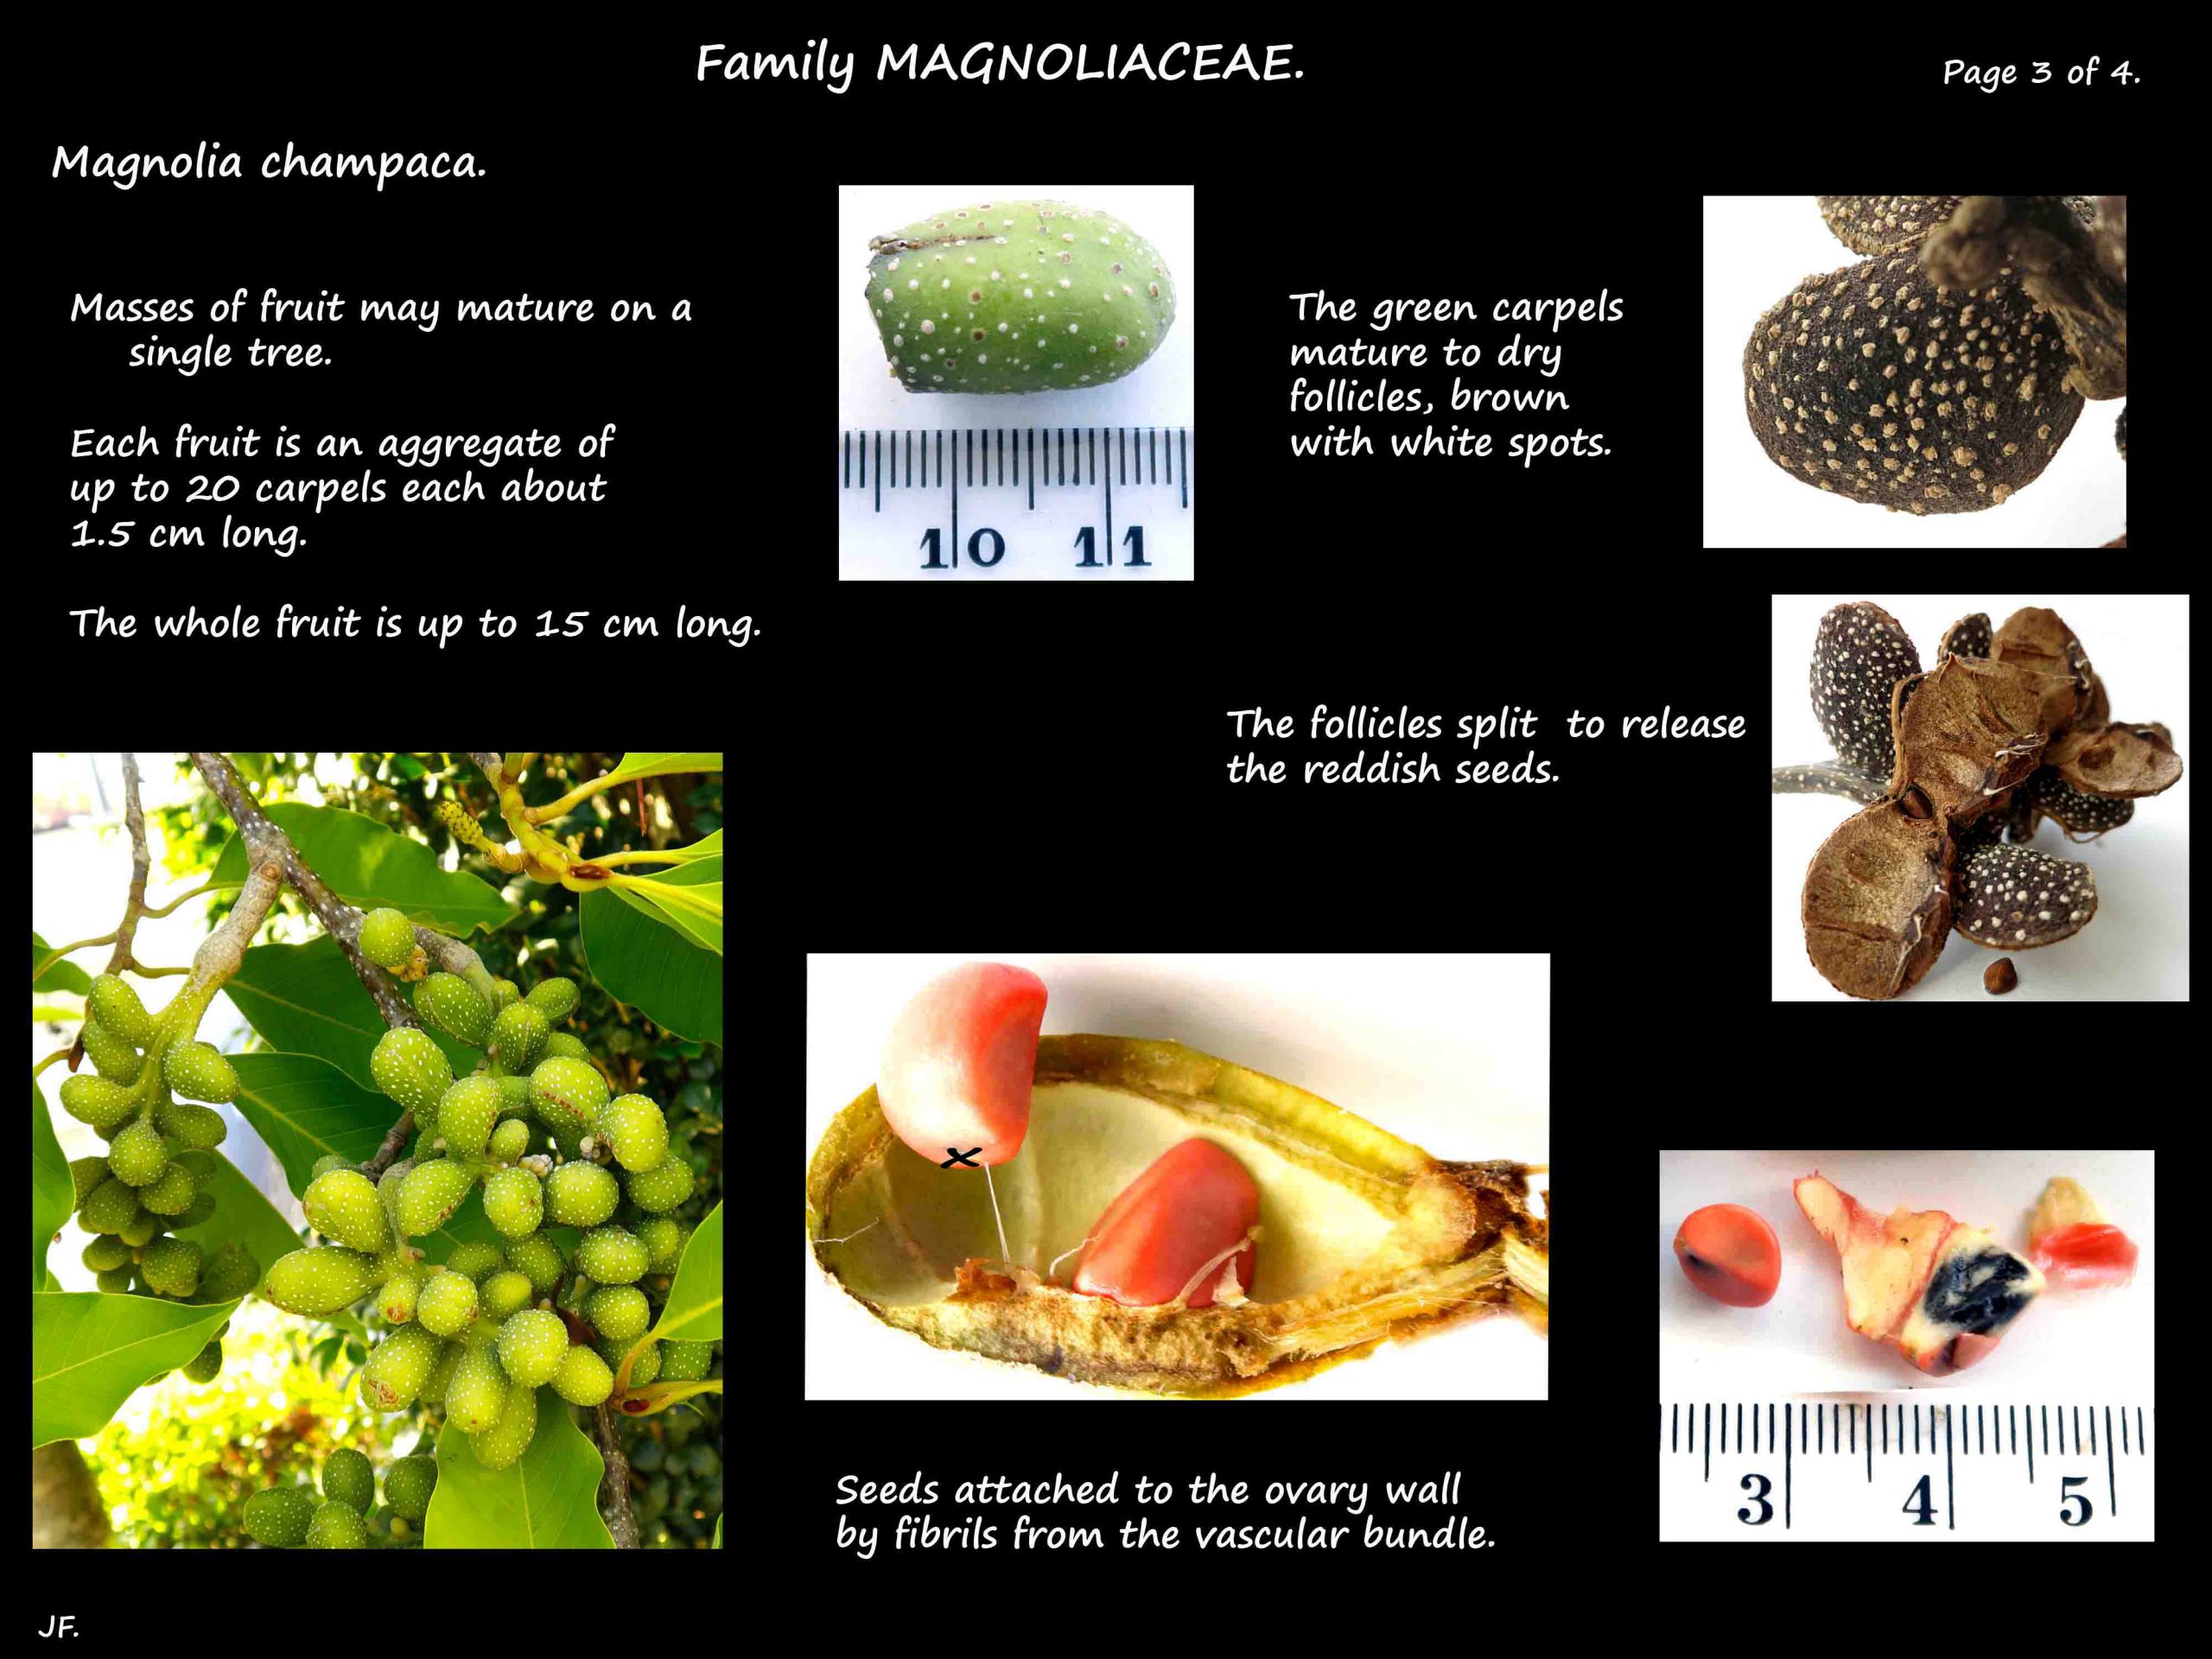 3 Aggregate fruit of Magnolia champaca